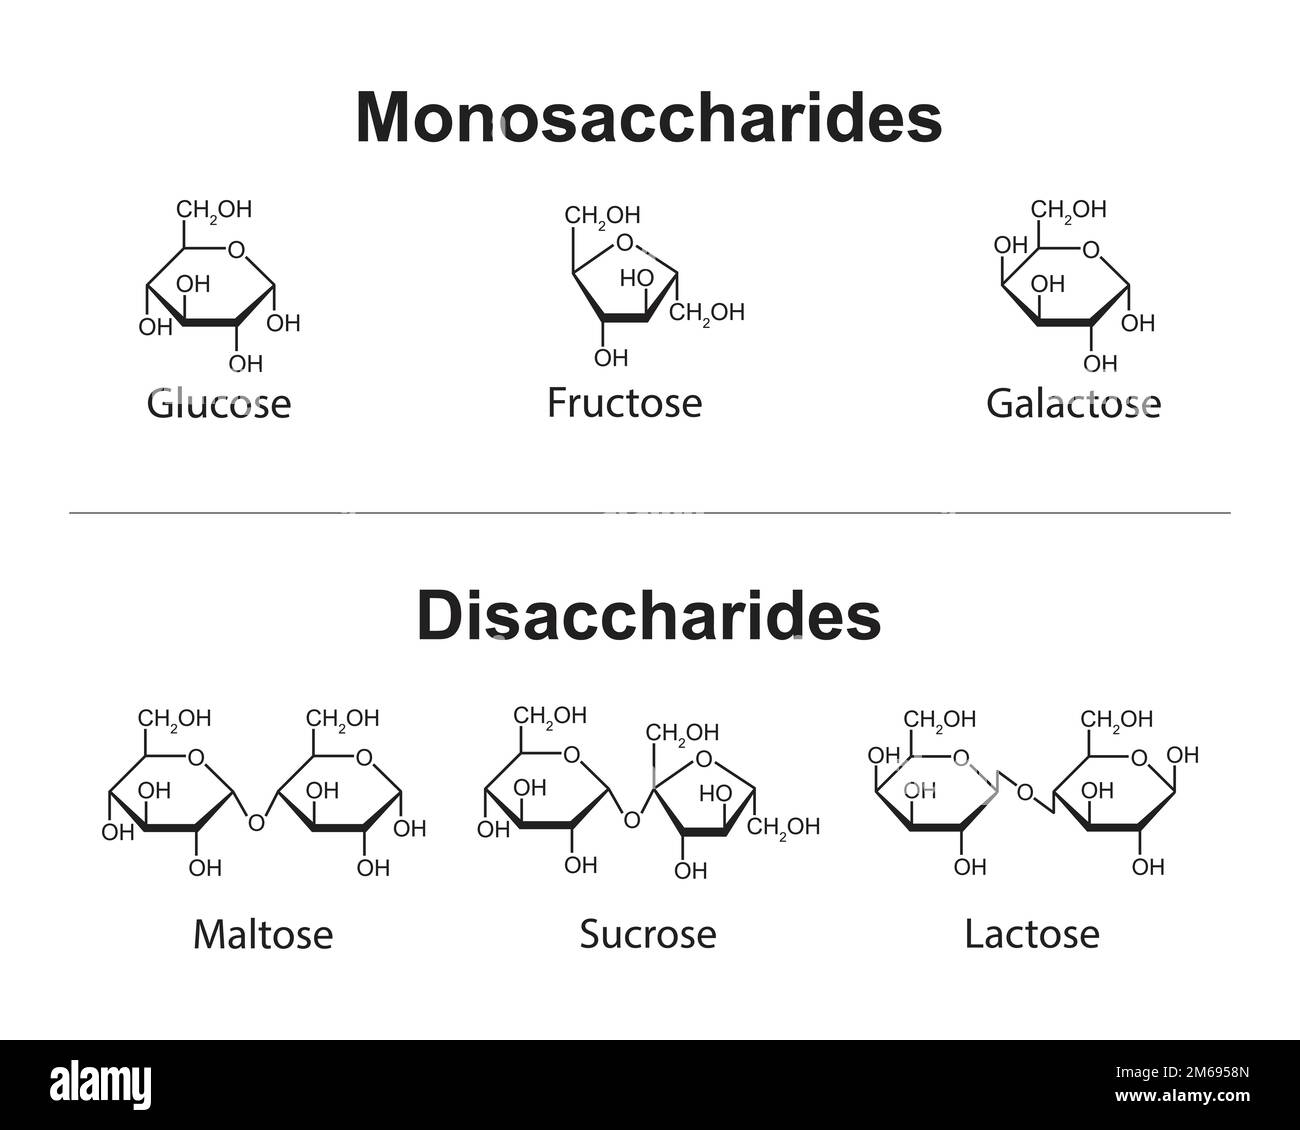 Monosaccharides and Disaccharides Scientific design. vector illustration. Stock Vector